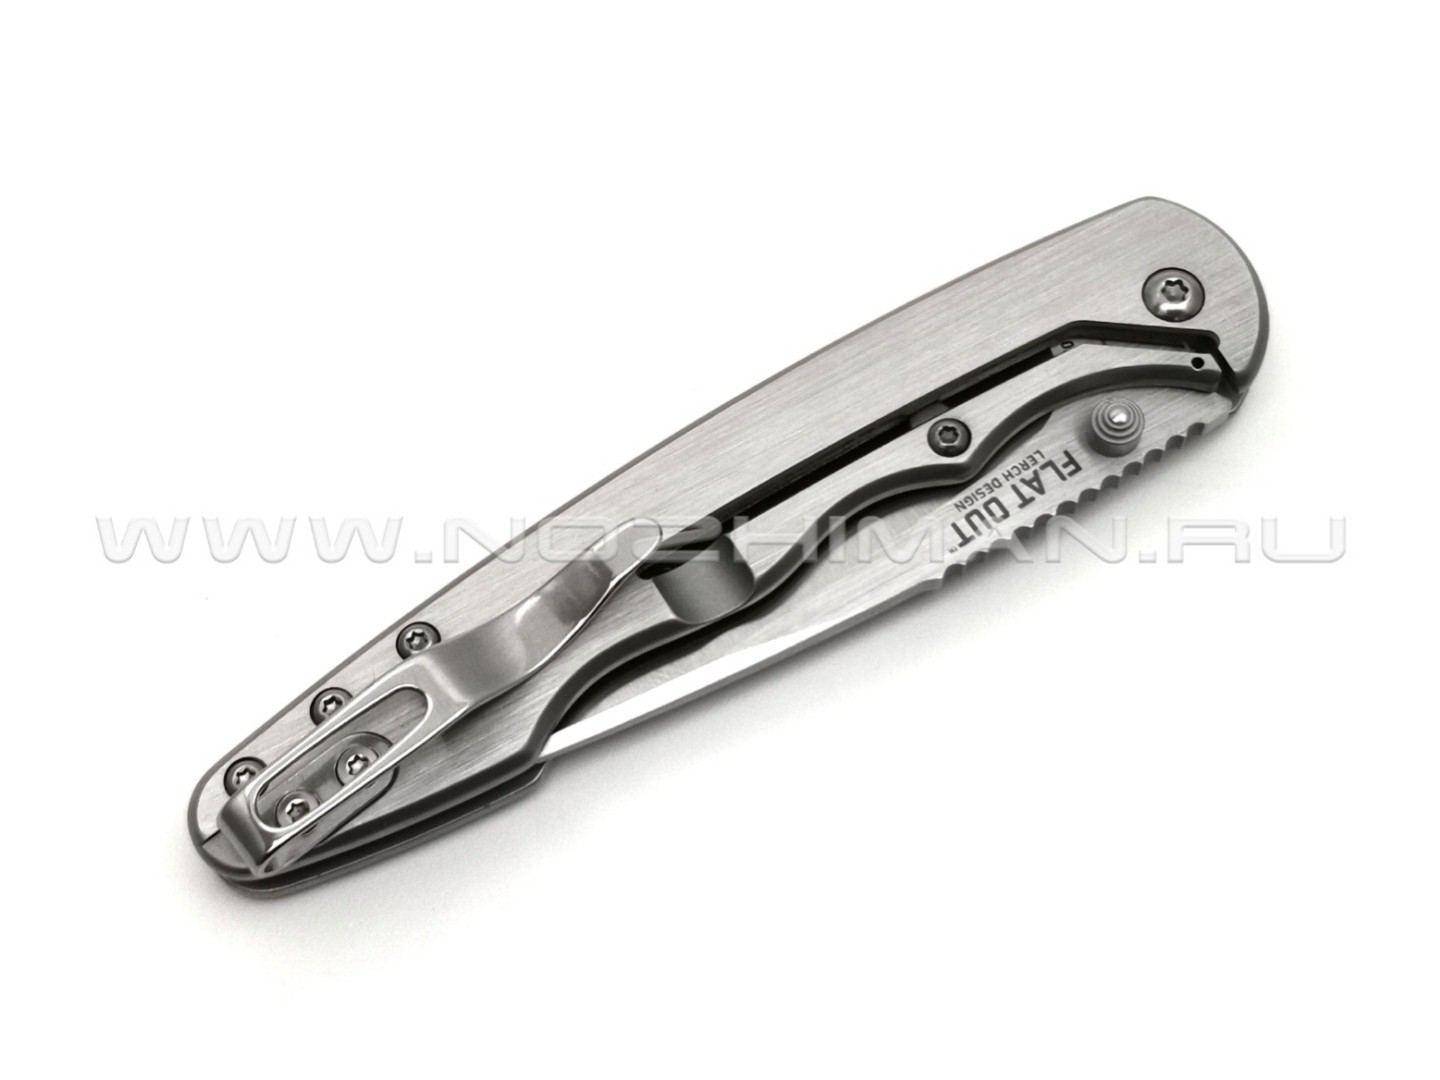 Нож CRKT Flat Out 7016 сталь 8Cr13MoV, рукоять Stainless steel